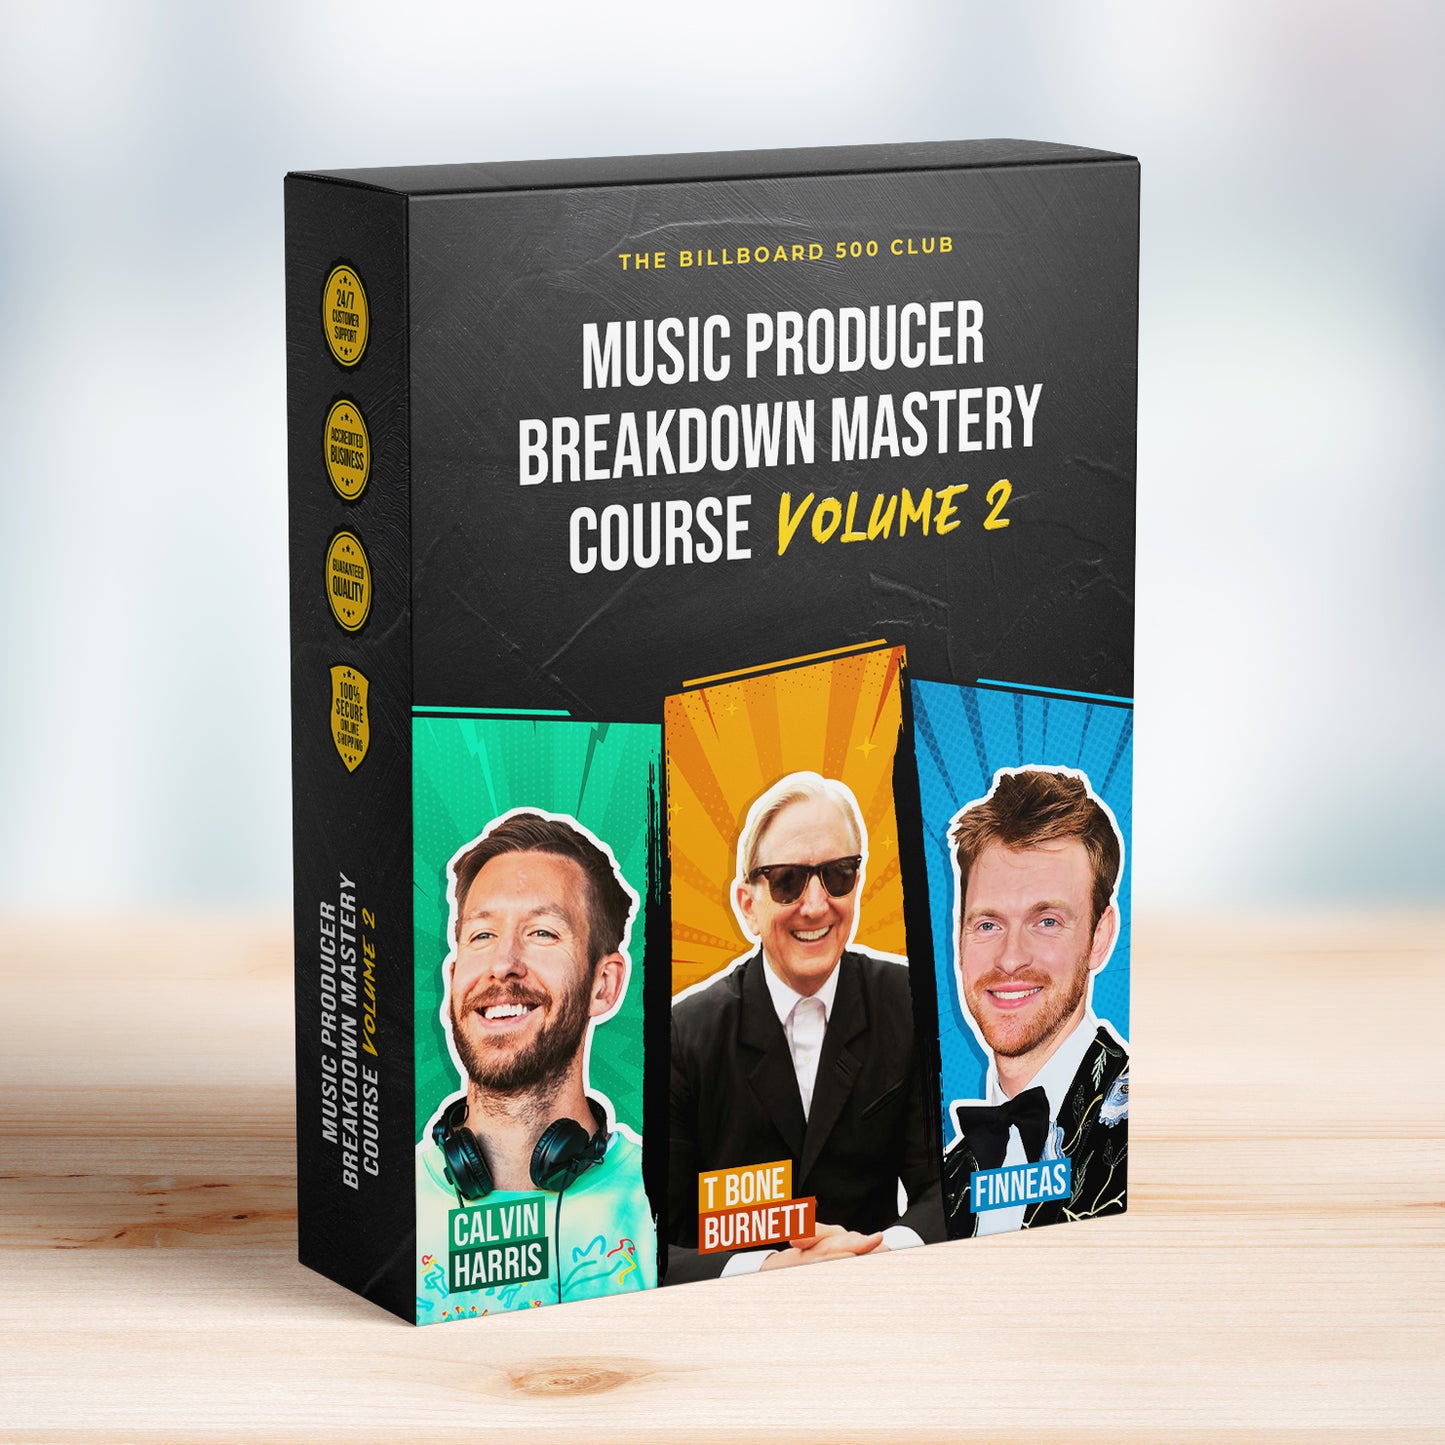 Music Producer Breakdown Mastery Course Volume 2 - Calvin Harris, Finneas, T Bone Burnett - The Billboard 500 Club